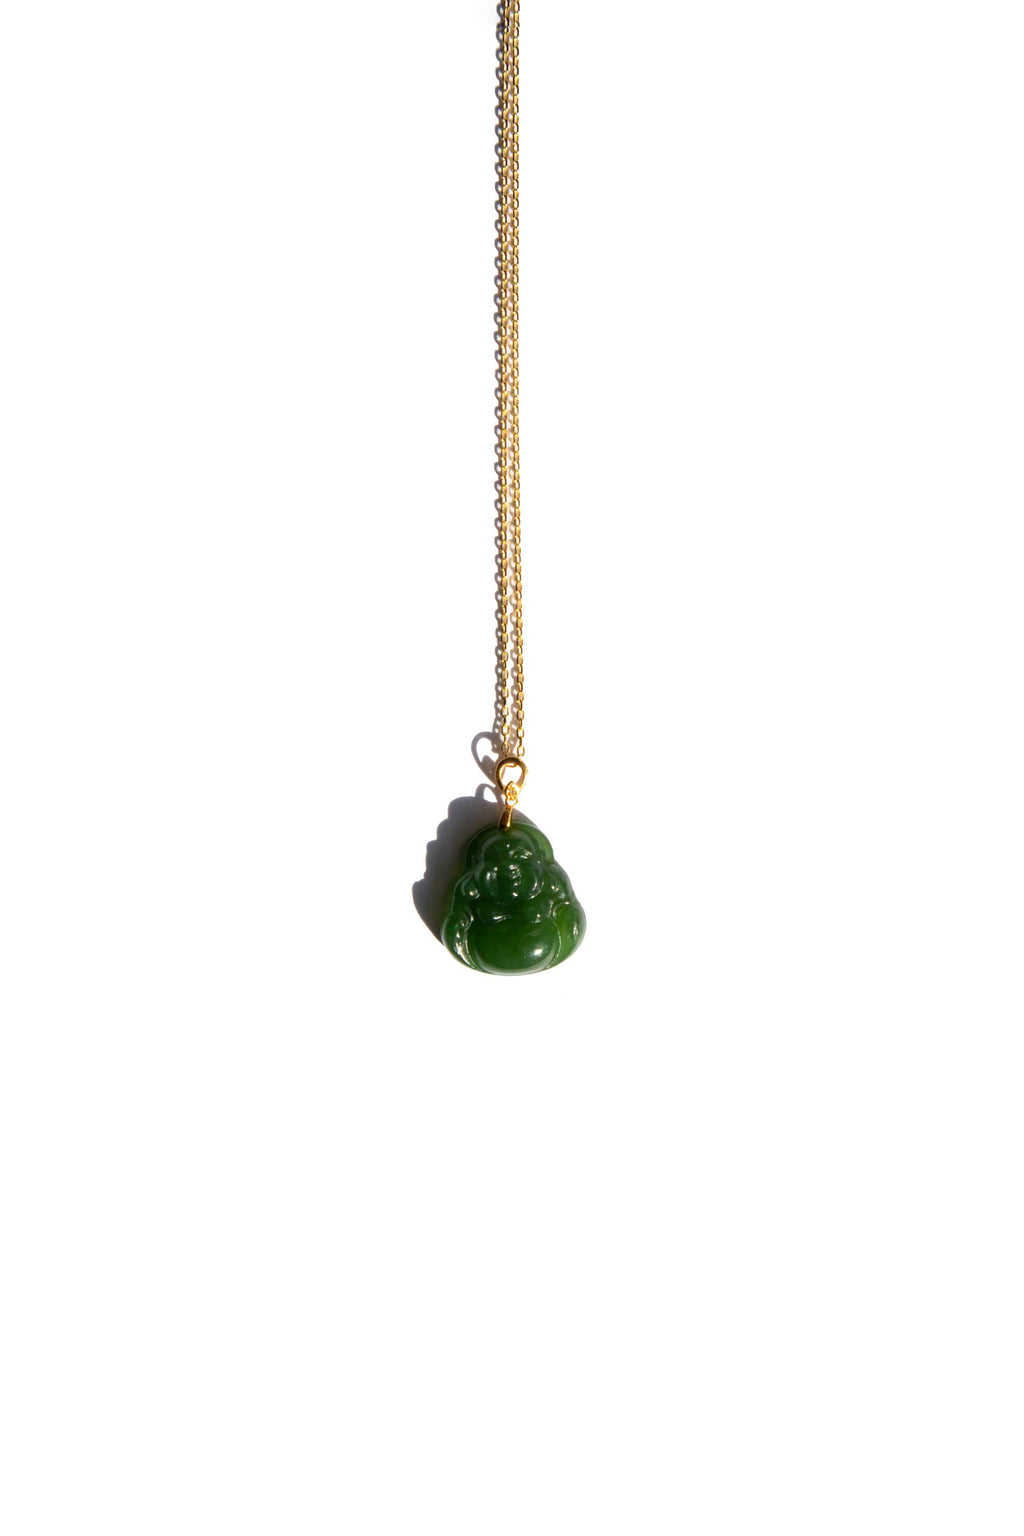 seree-jade-necklace-with-green-buddha-pendant